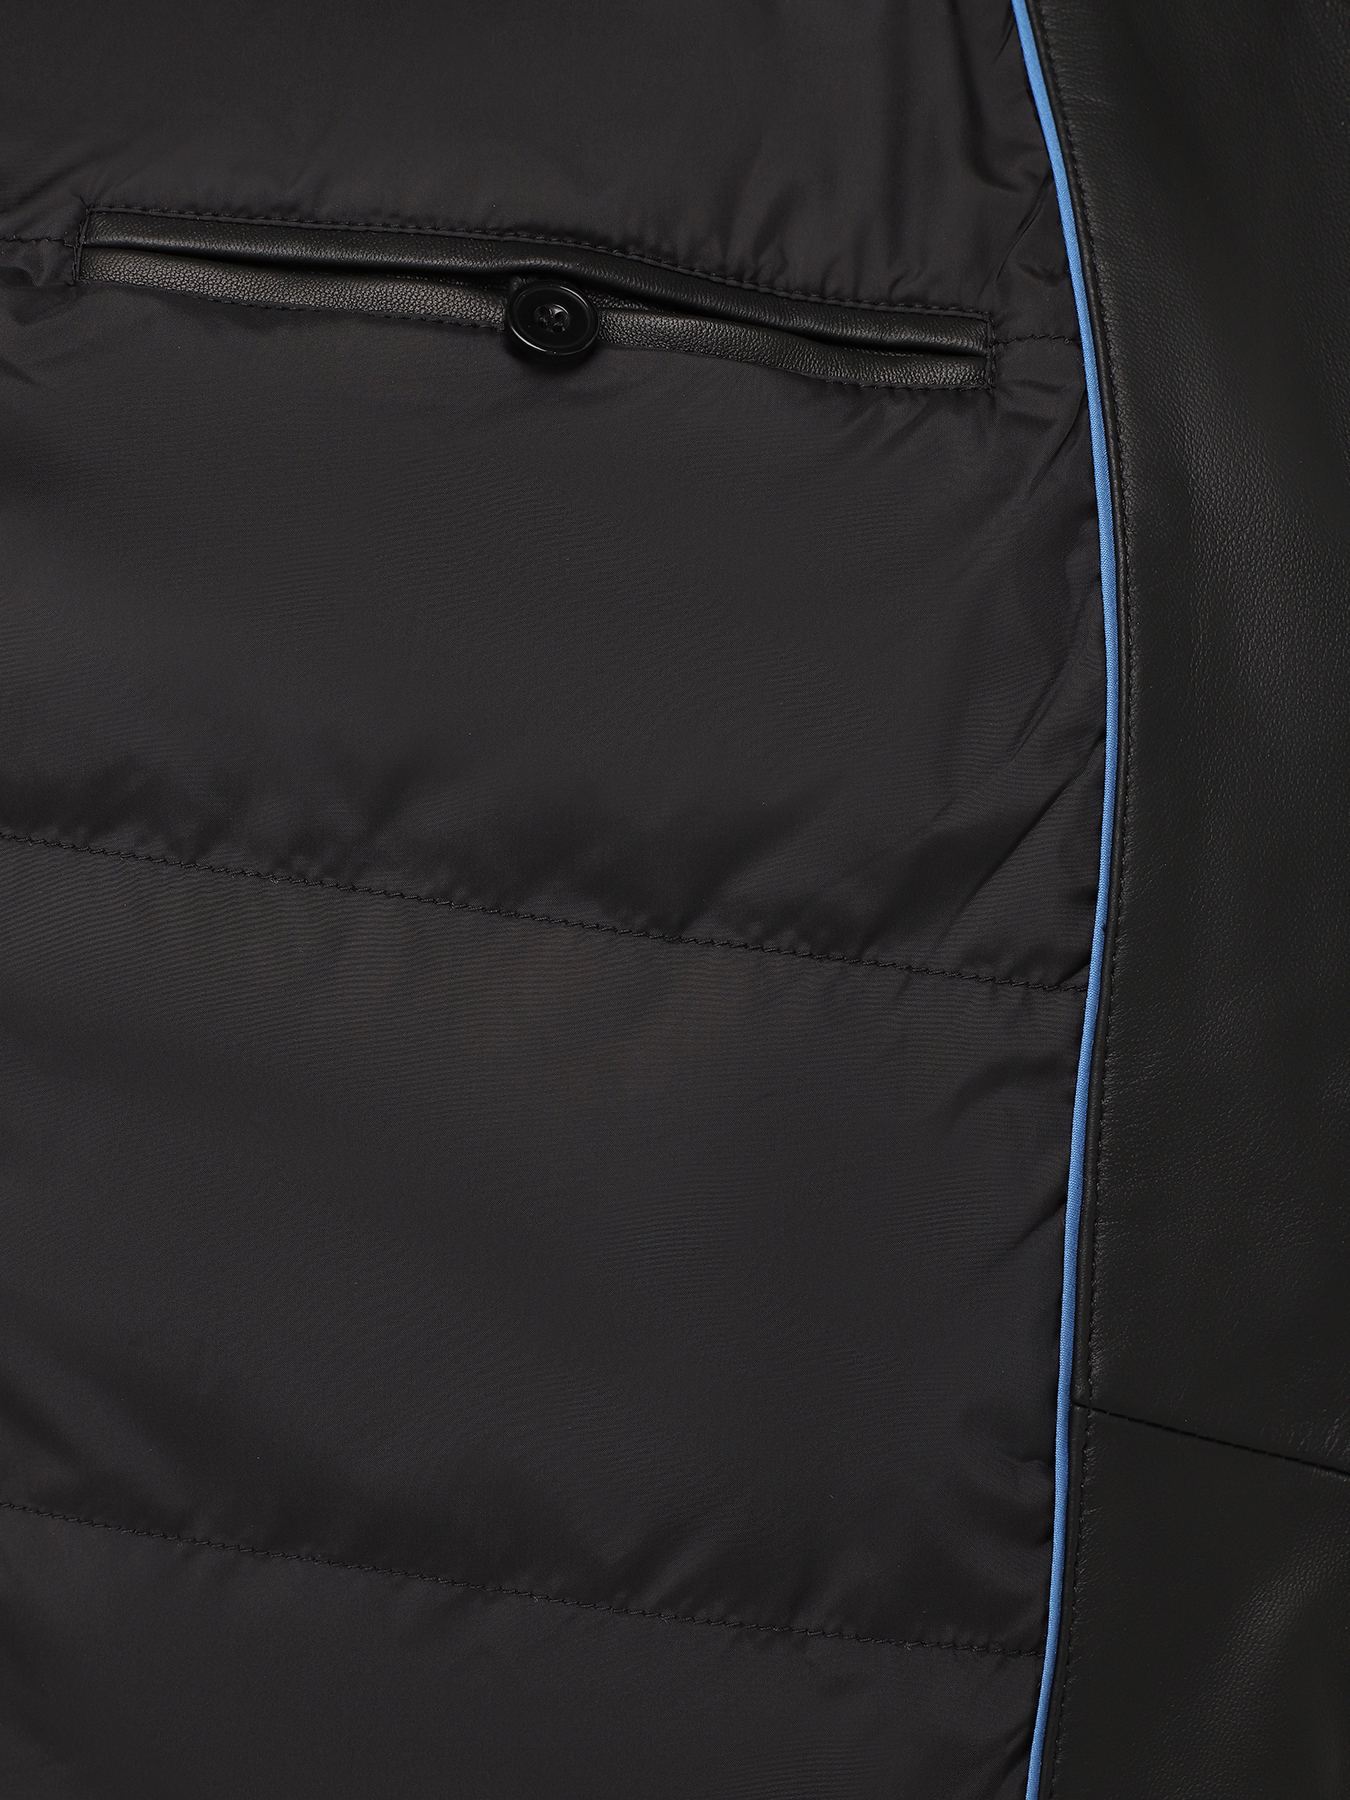 Кожаная куртка Ritter 390994-025, цвет черный, размер 48 - фото 4